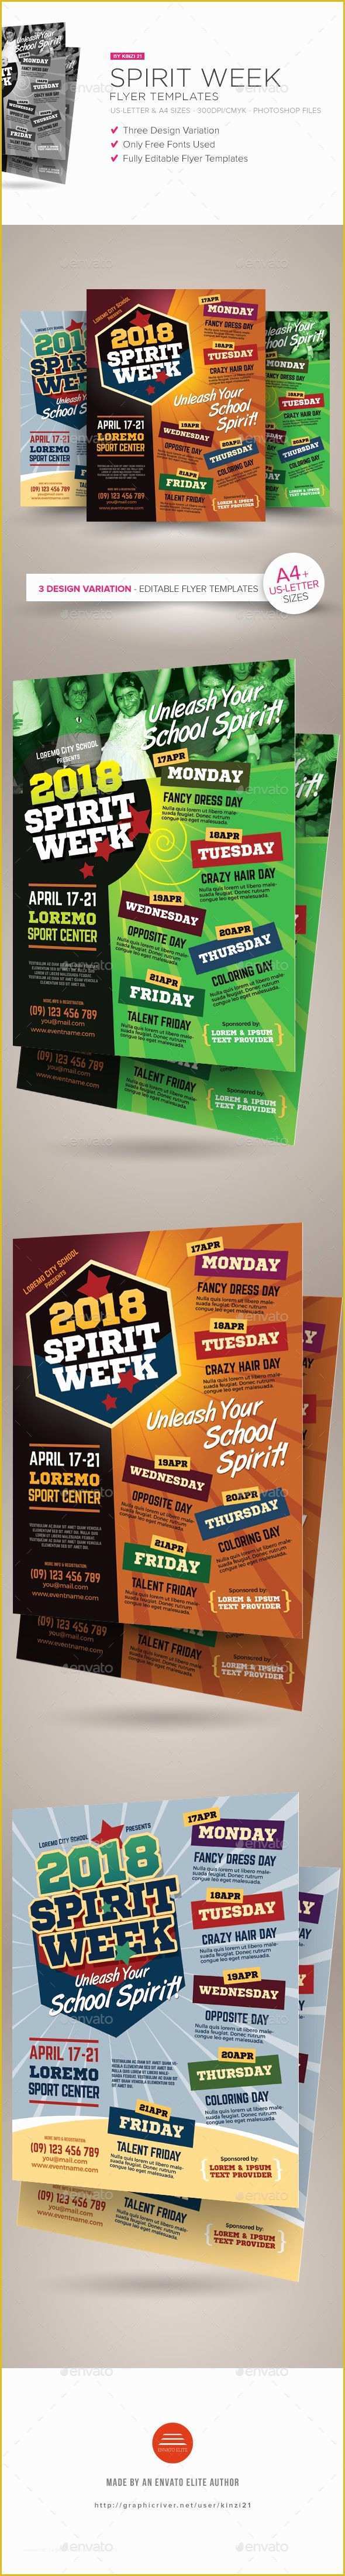 Free Spirit Week Flyer Template Of 277 Best Flyer Templates Images On Pinterest